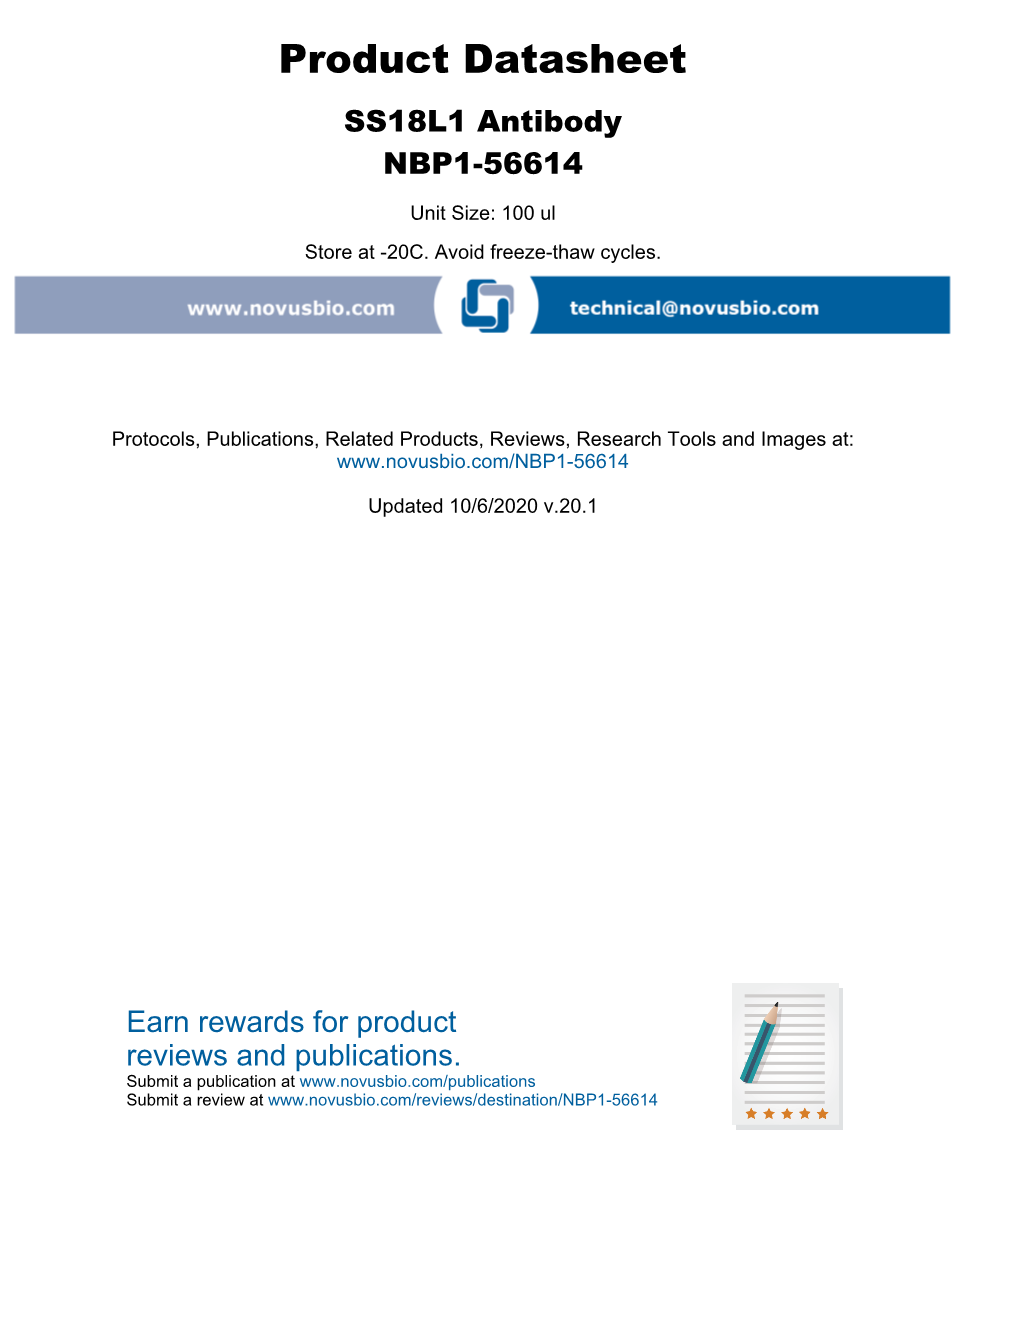 Product Datasheet SS18L1 Antibody NBP1-56614